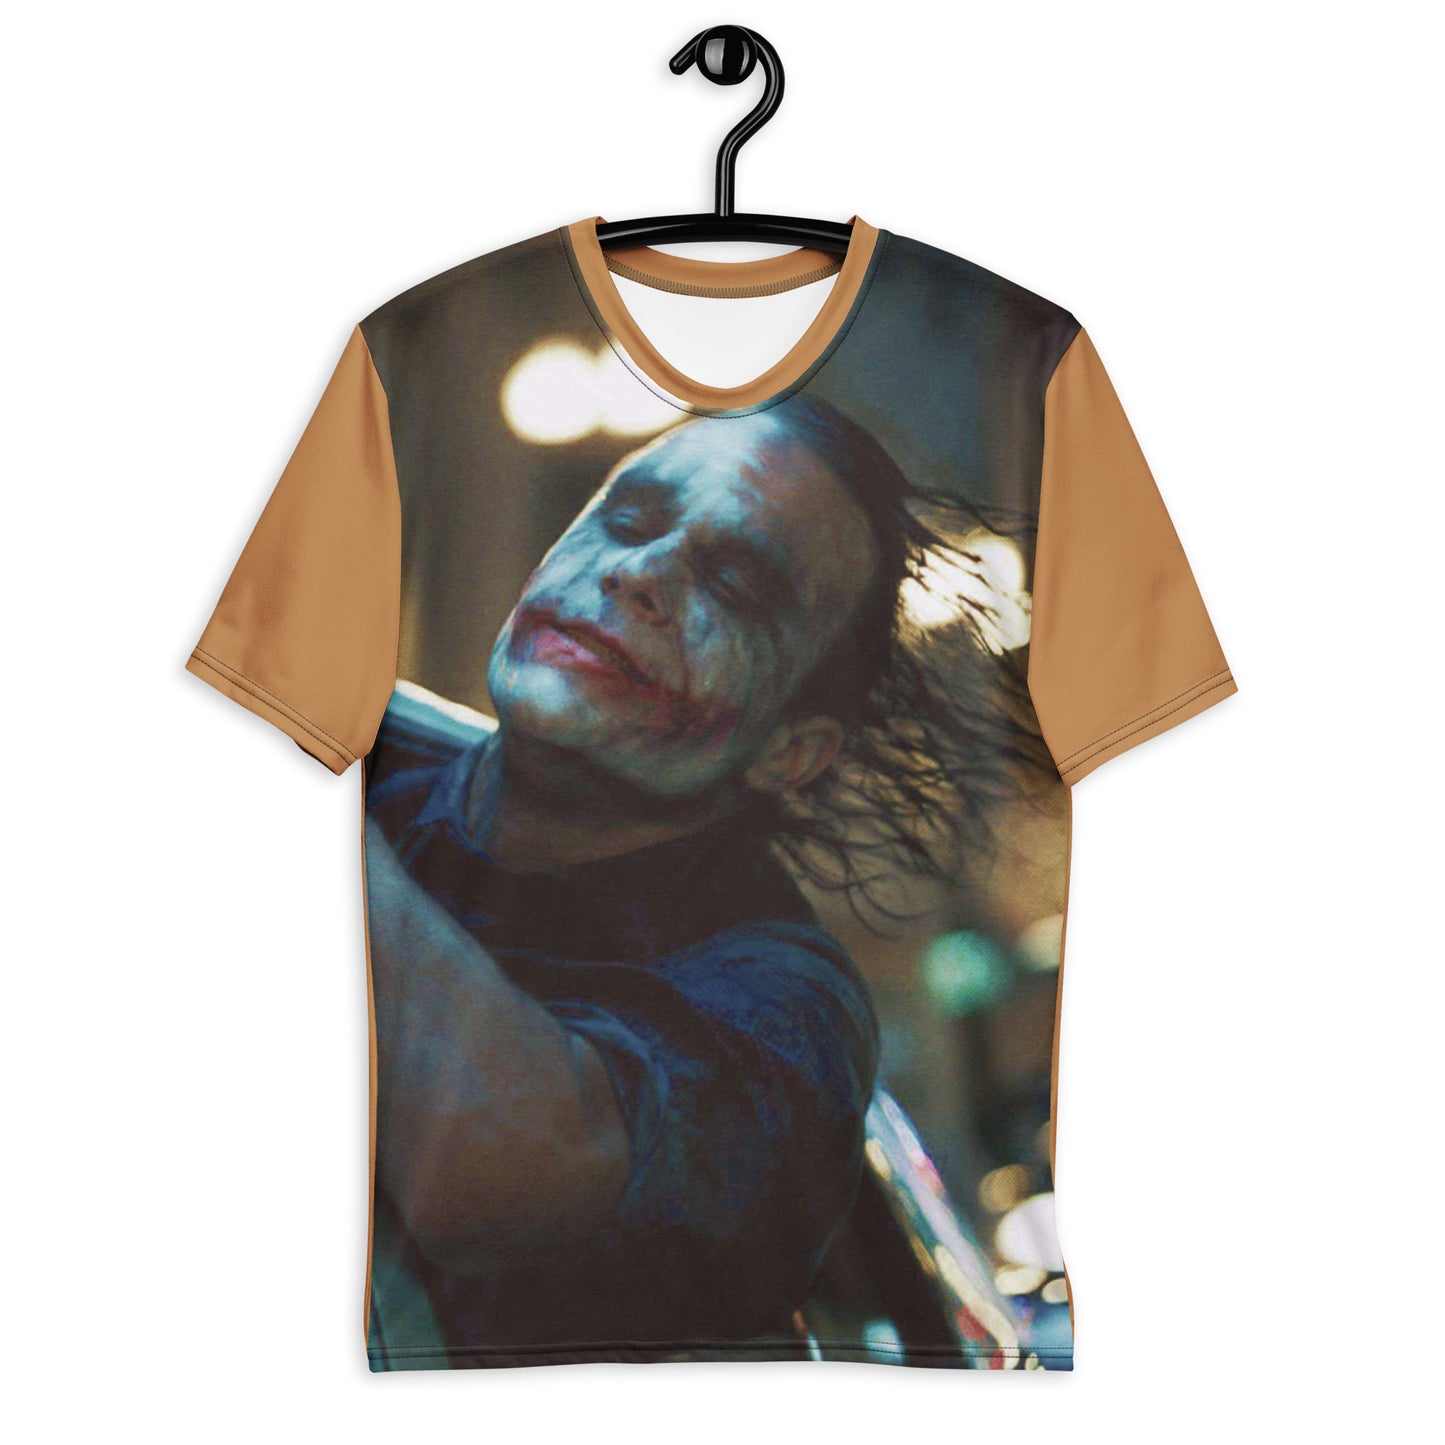 Joker Cop Car KiSS Men's t-shirt - Dark Knight inspired Heath Ledger Villain Superhero